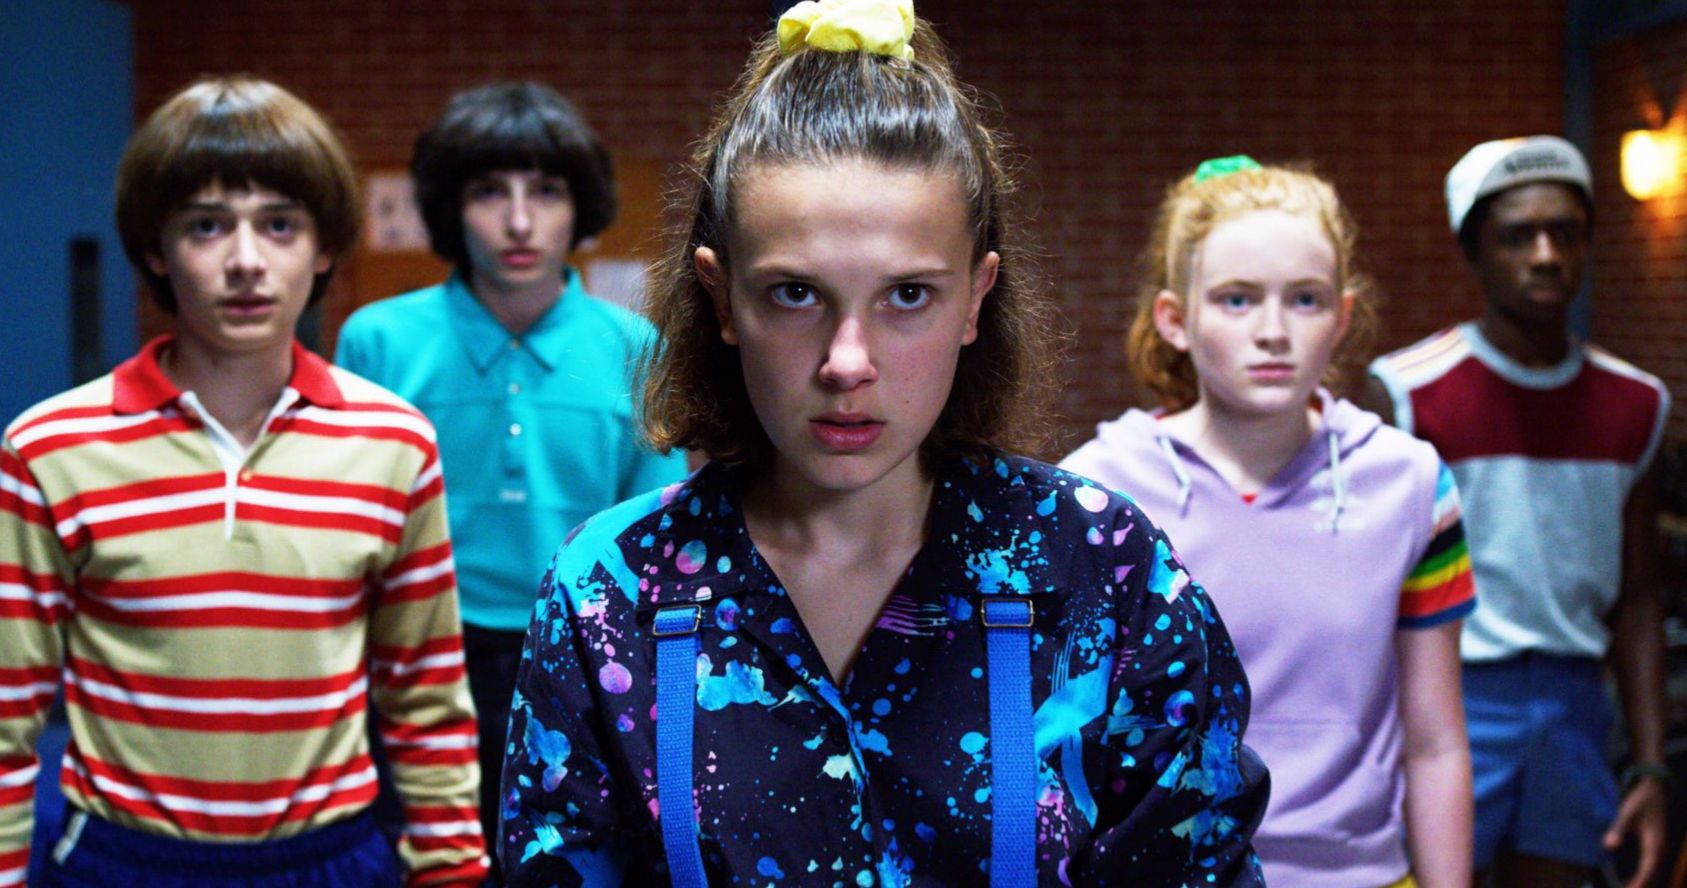 Stranger Things Season 3 Scores Streaming Record for Netflix